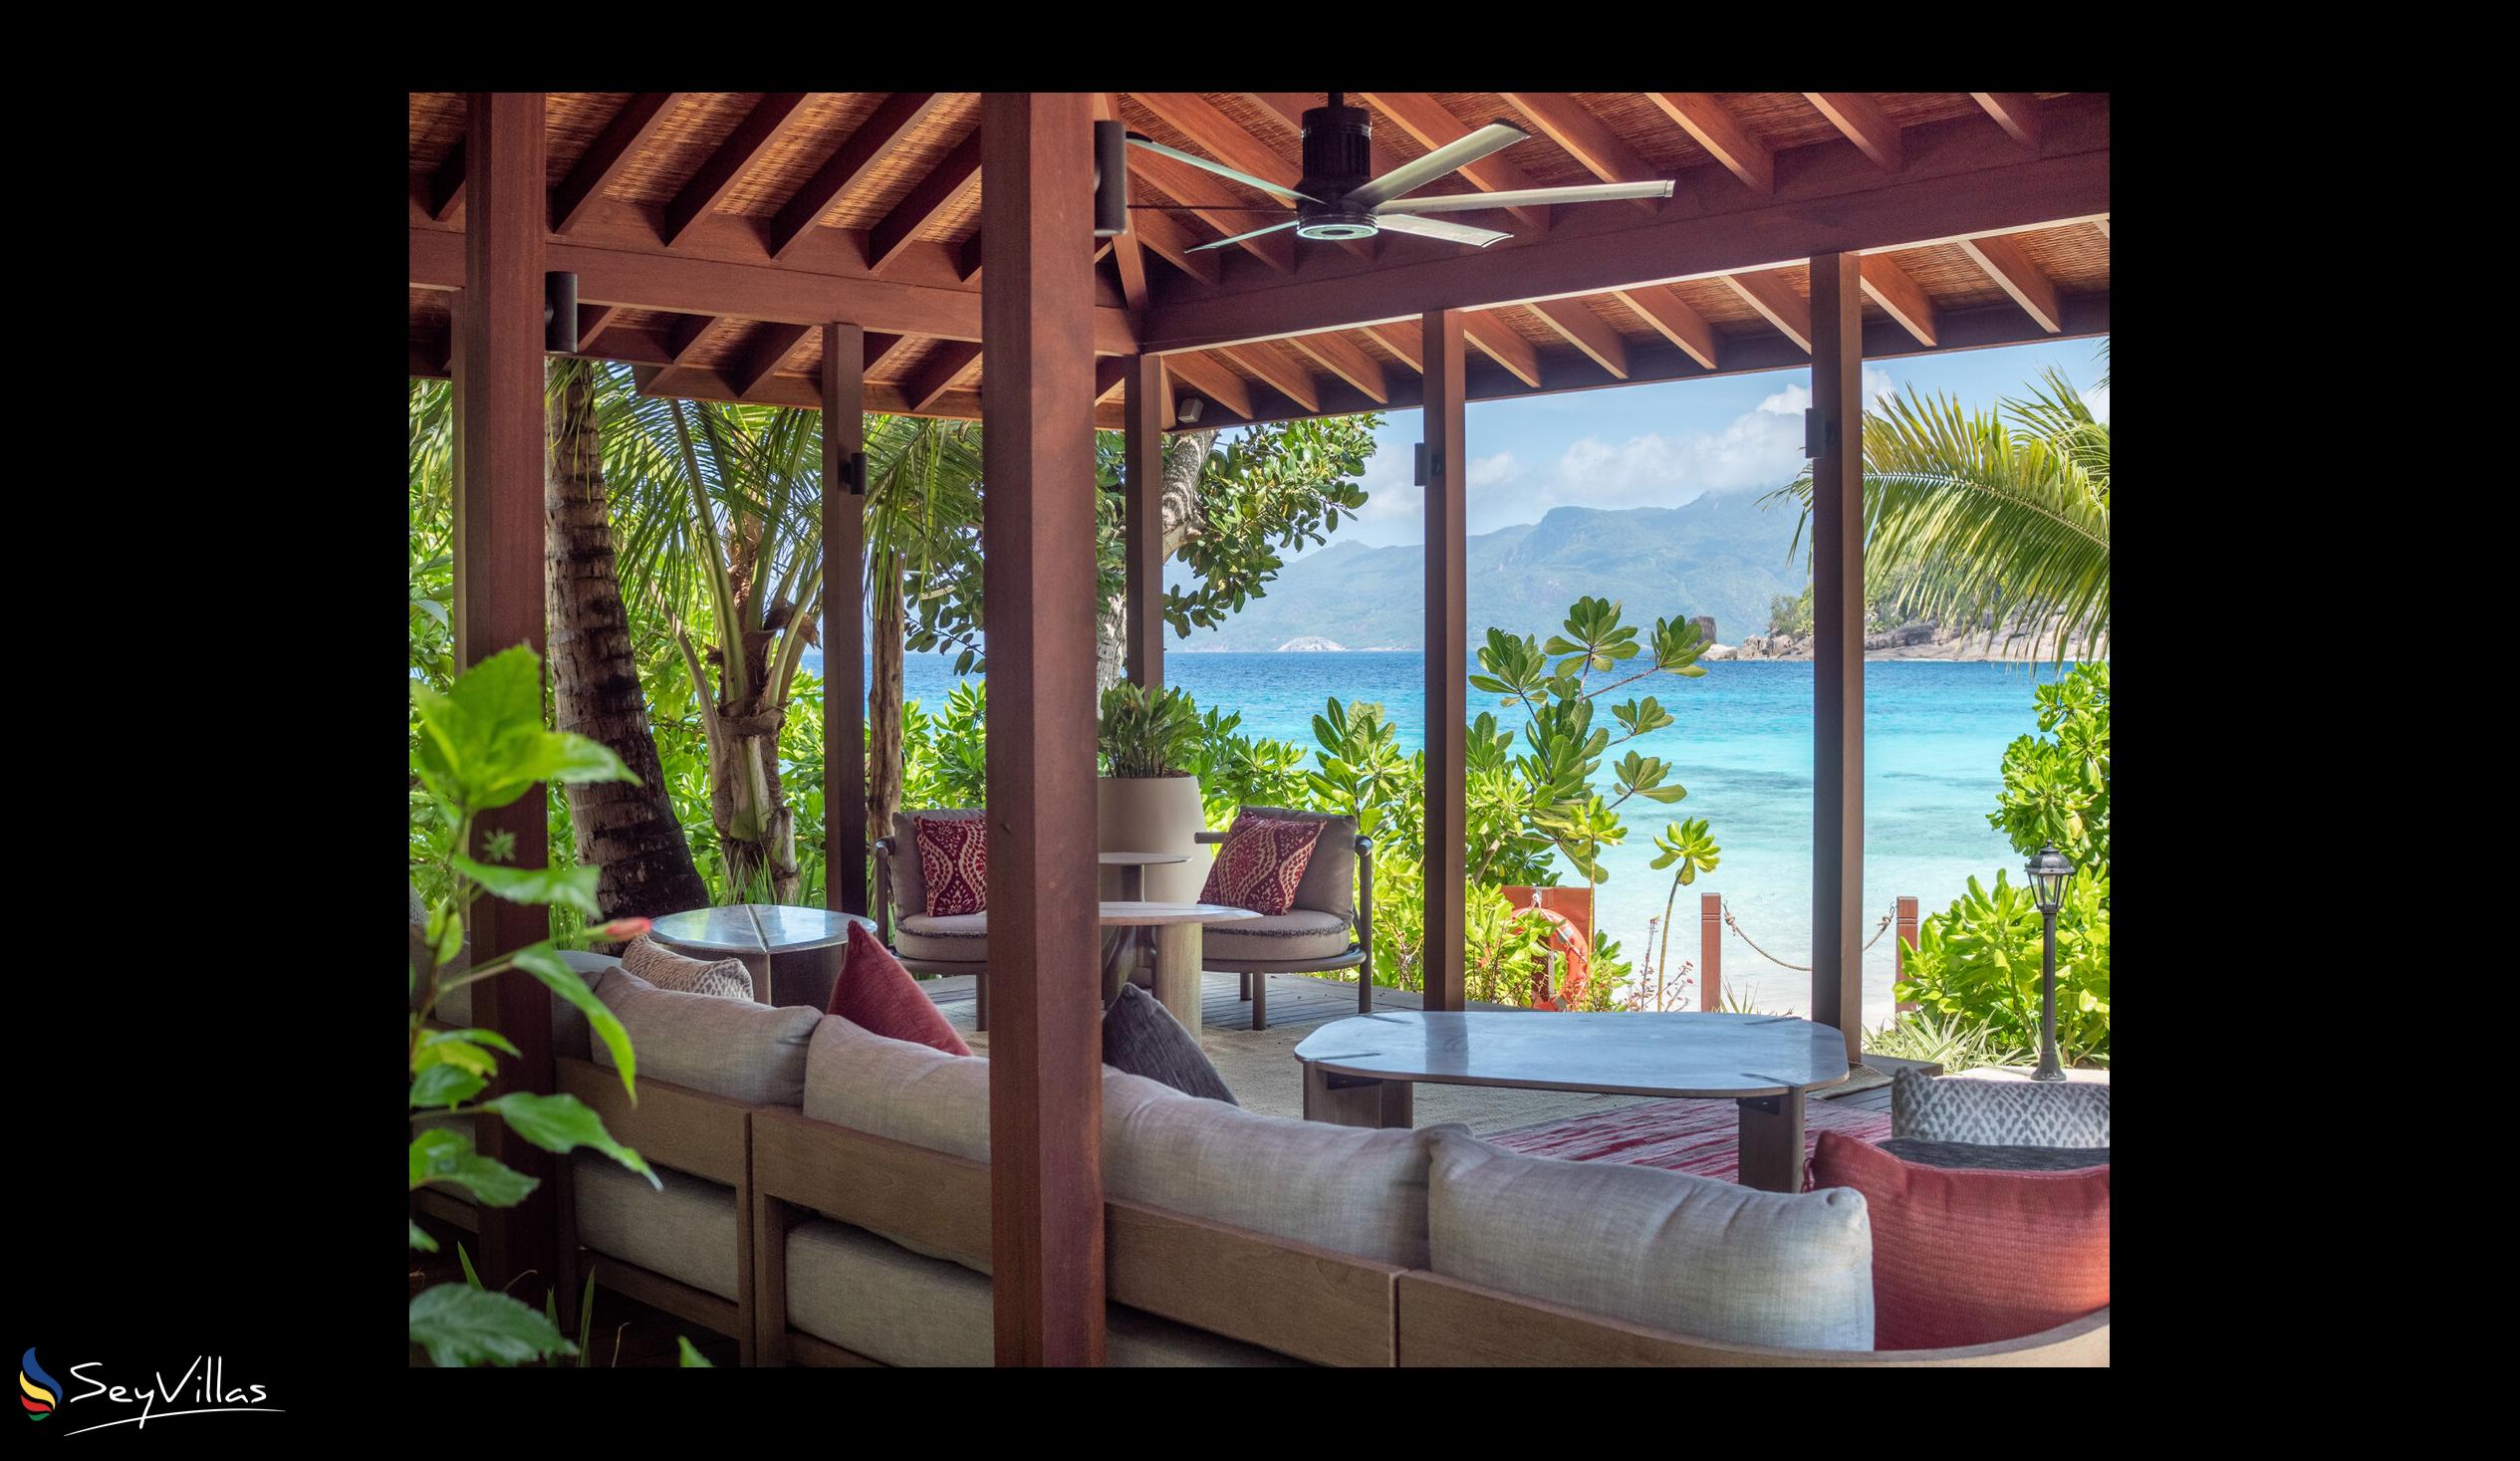 Photo 95: Four Seasons Resort - 3-Bedroom Royal Suite - Mahé (Seychelles)